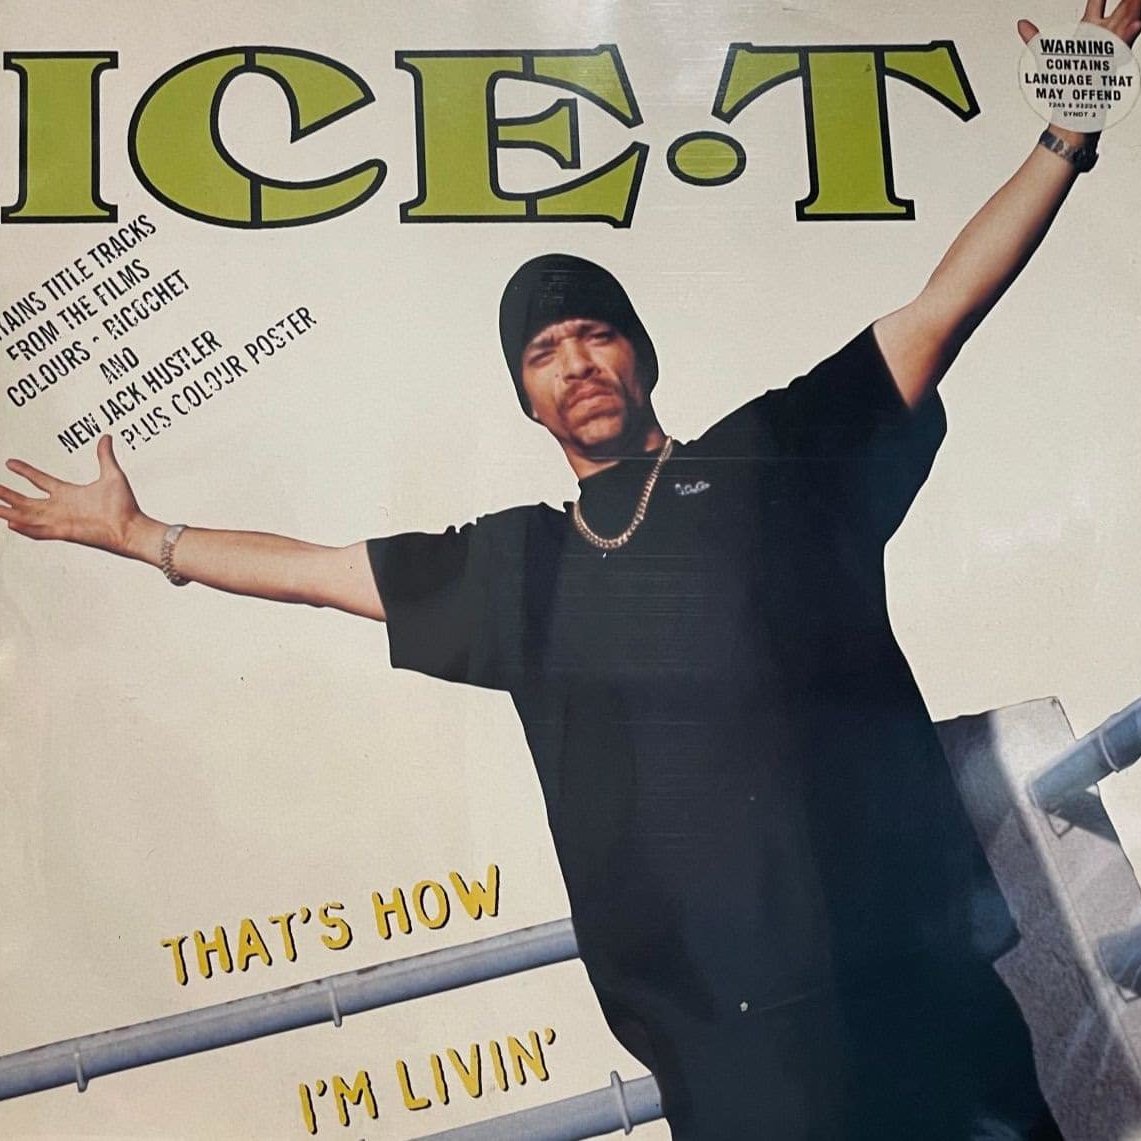 Ice T - That's how I'm livin'